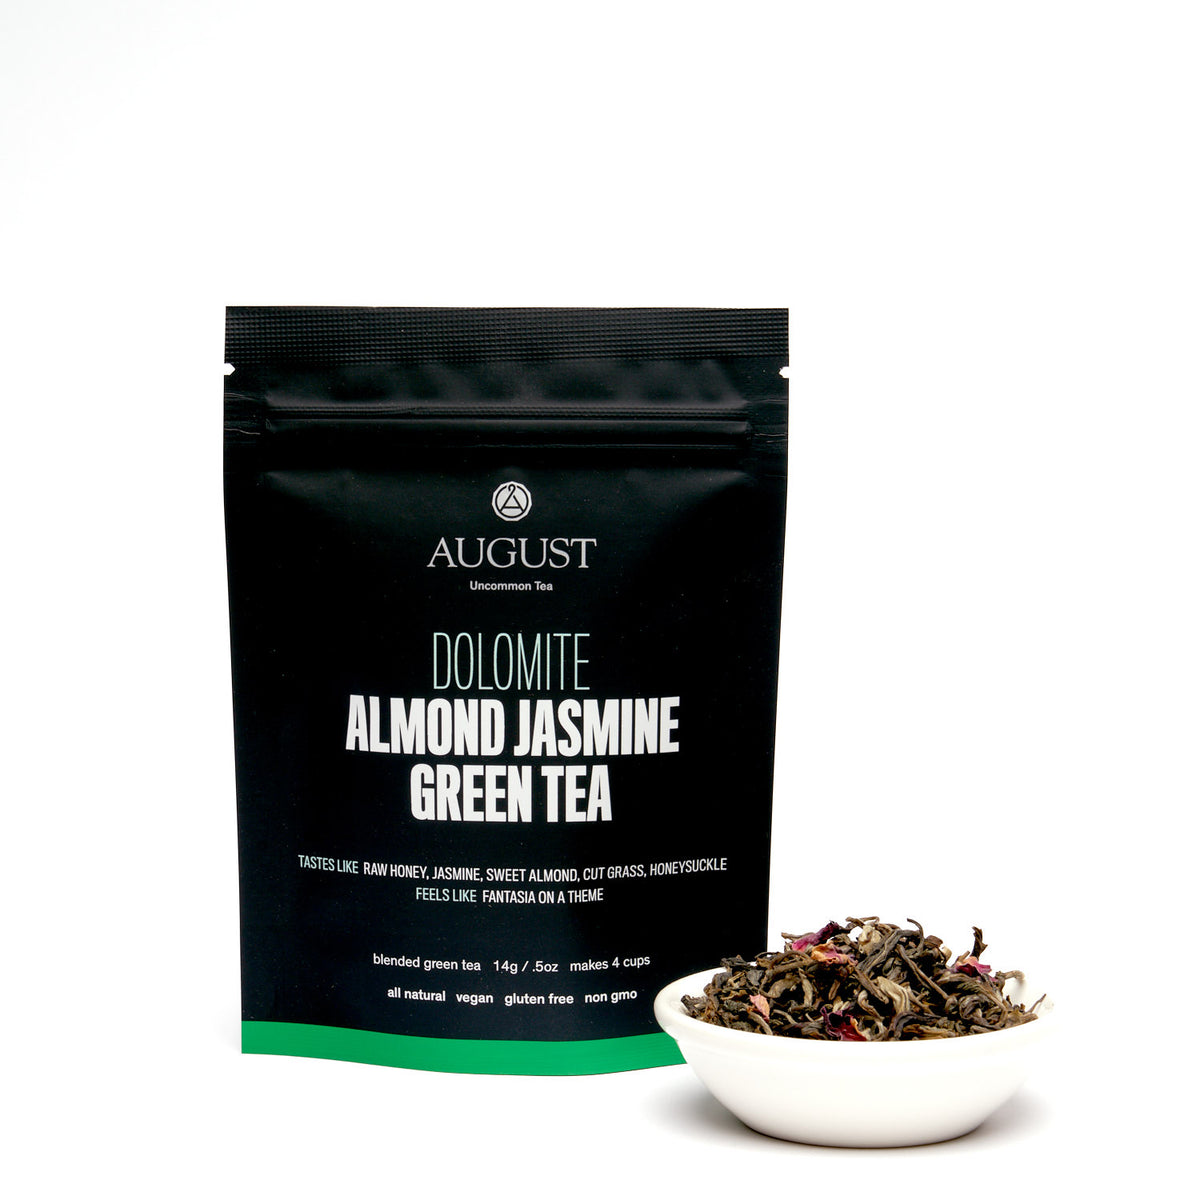 Dolomite: Almond Jasmine Green Tea